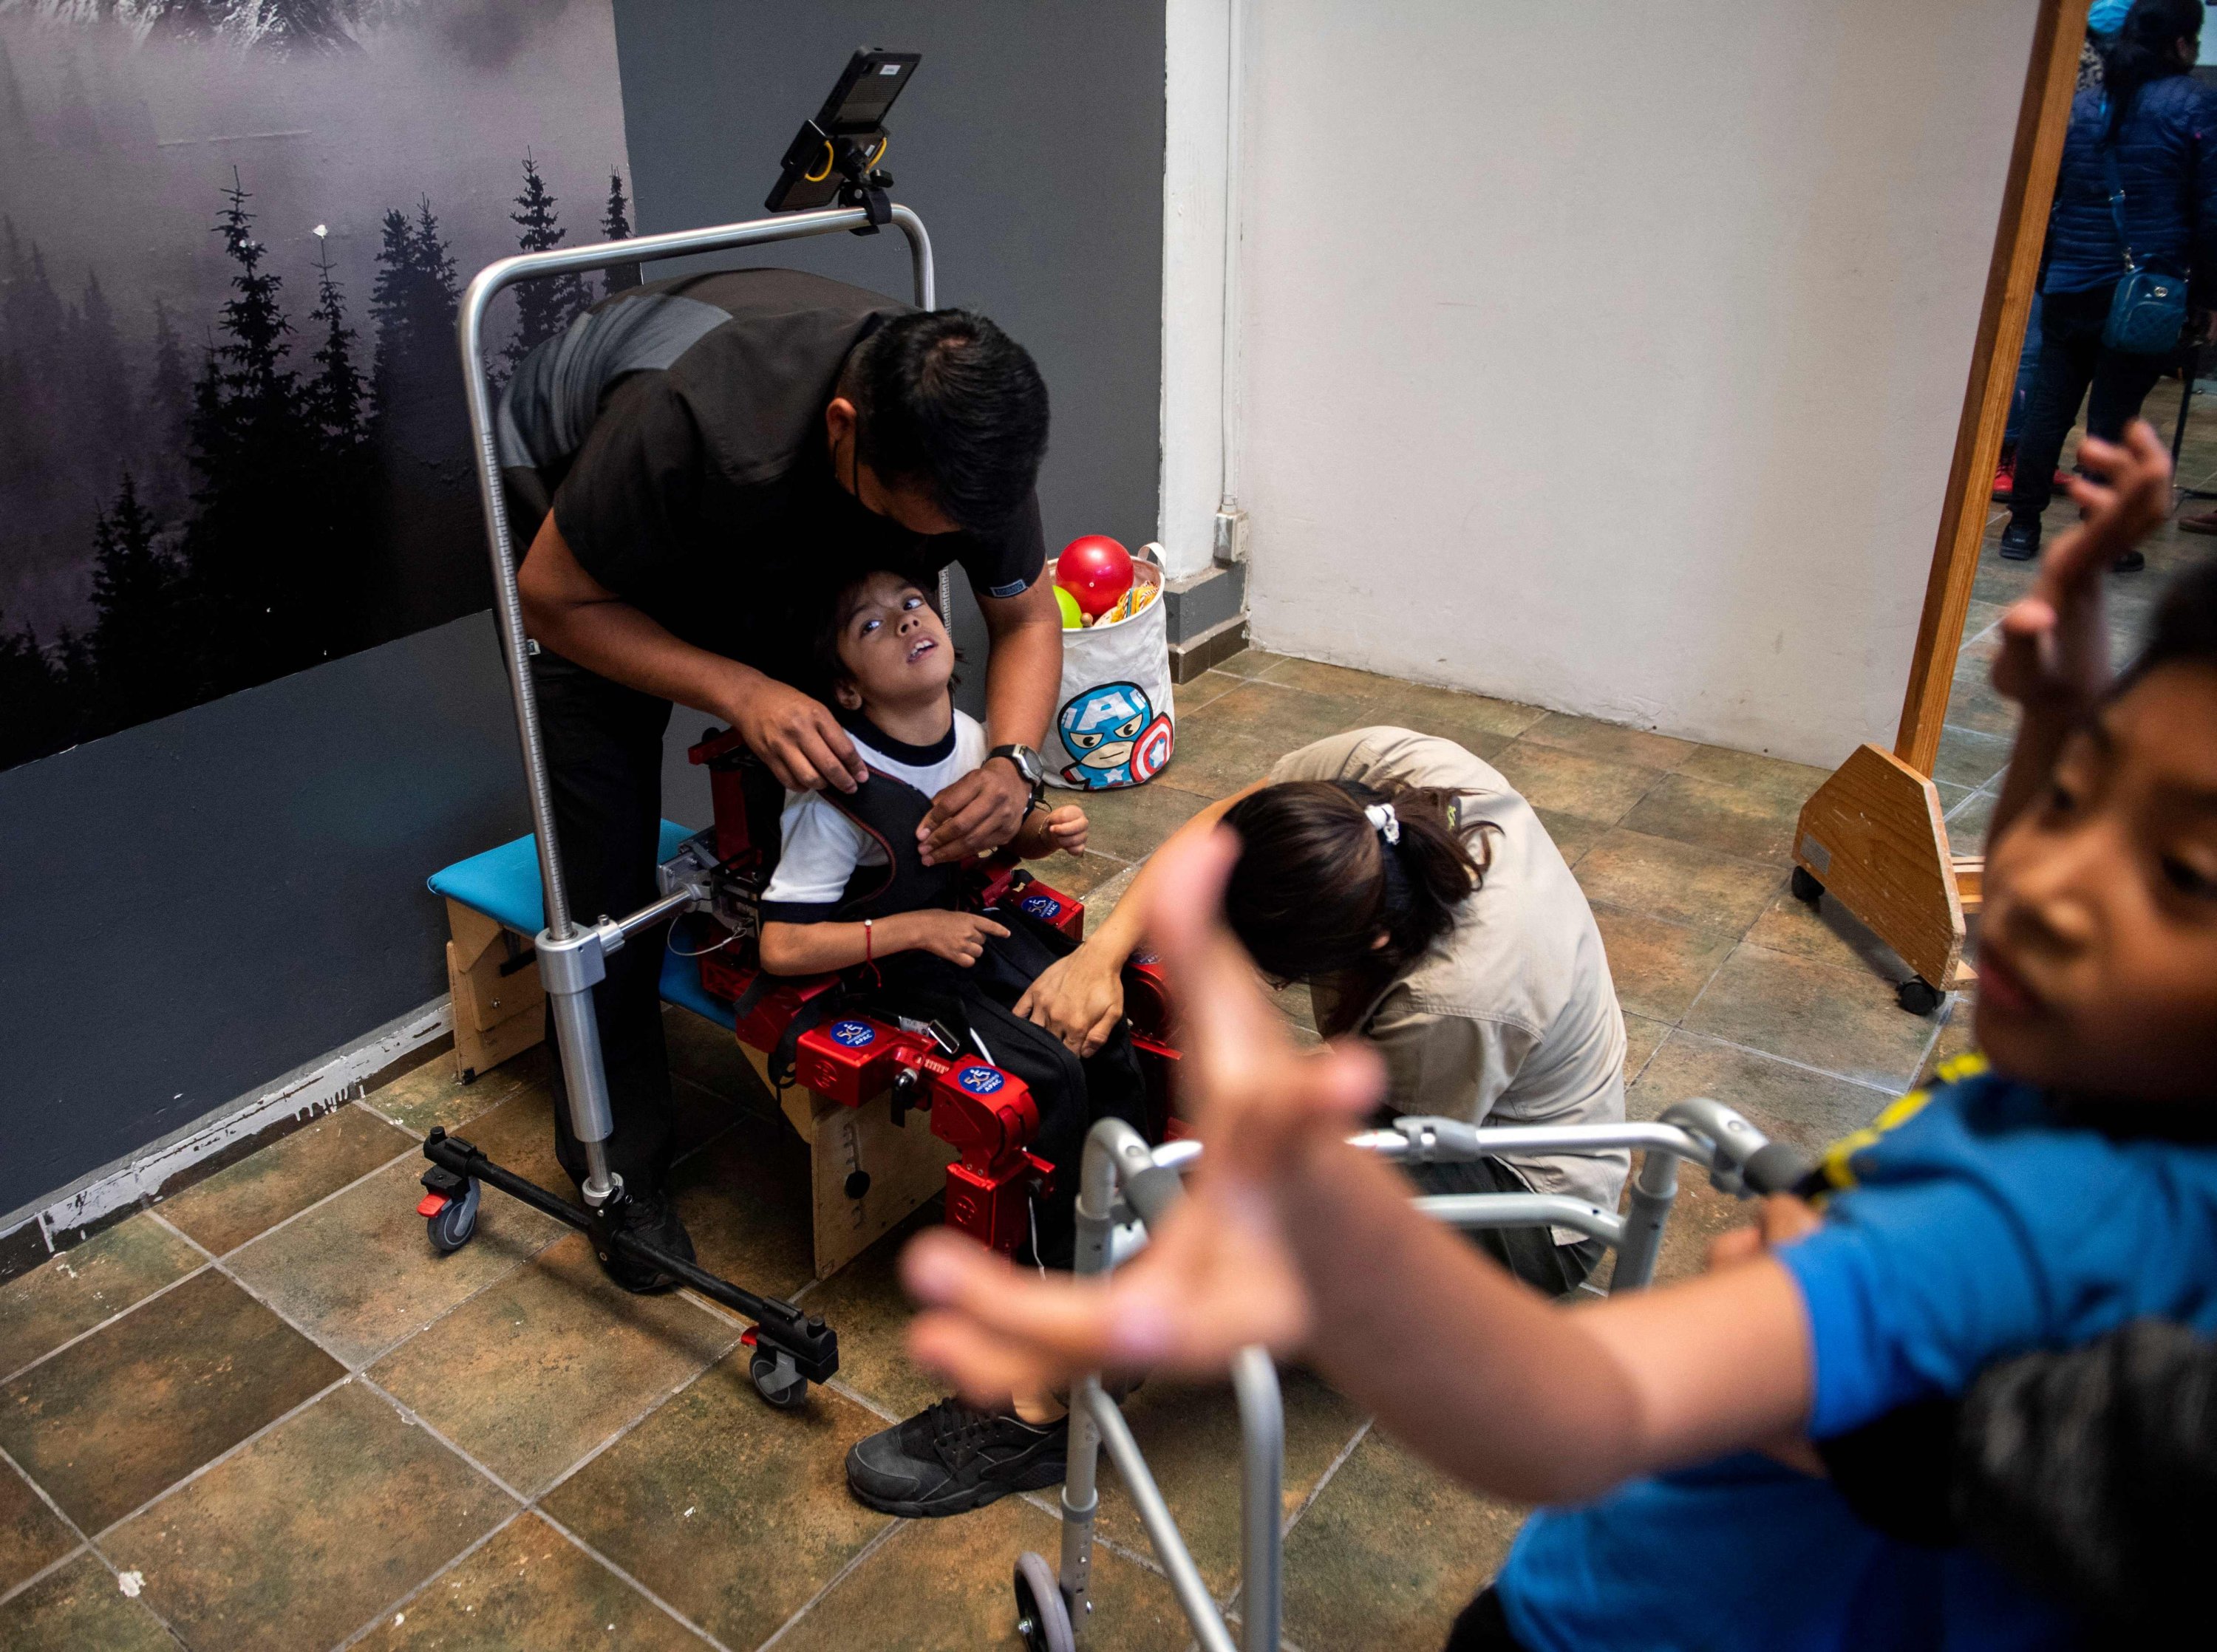 Sofia Saldaa Lopez dibantu oleh ahli terapi fisik selama sesi rehabilitasi, di Association for People with Cerebral Palsy di Mexico City, Meksiko, 18 Oktober 2022. (AFP Photo)